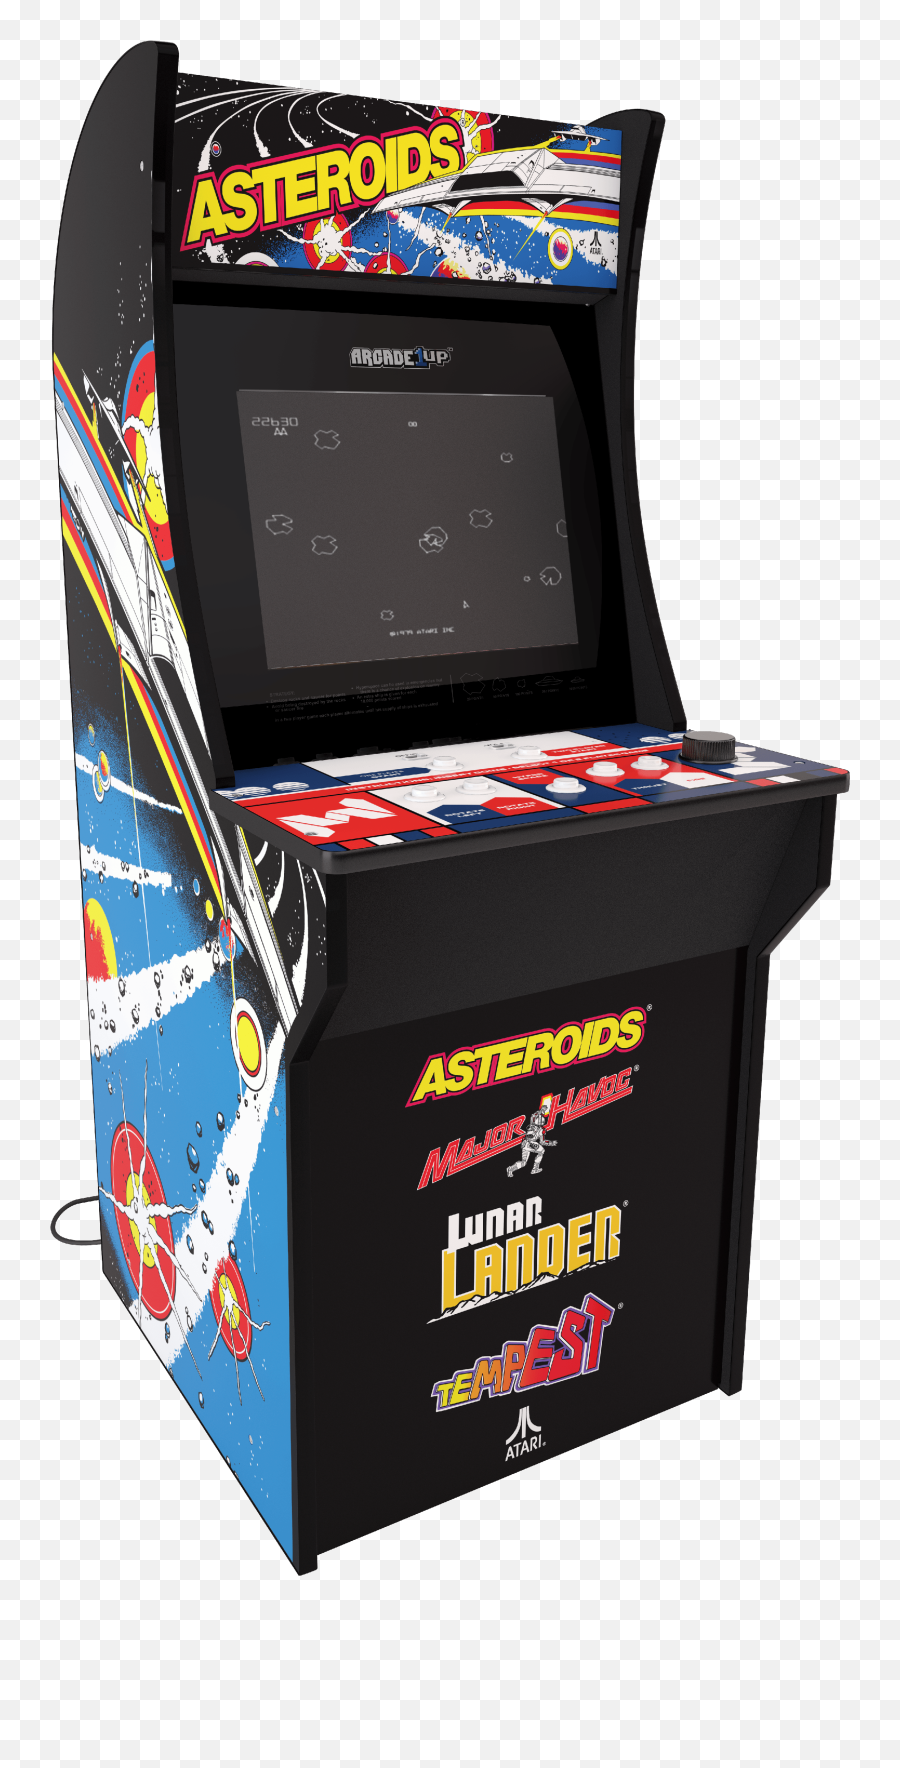 Asteroids Arcade Machine Arcade1up 4ft - Walmartcom Arcade1up Asteroids Emoji,Amazon Emotions Tree Climbing Articles